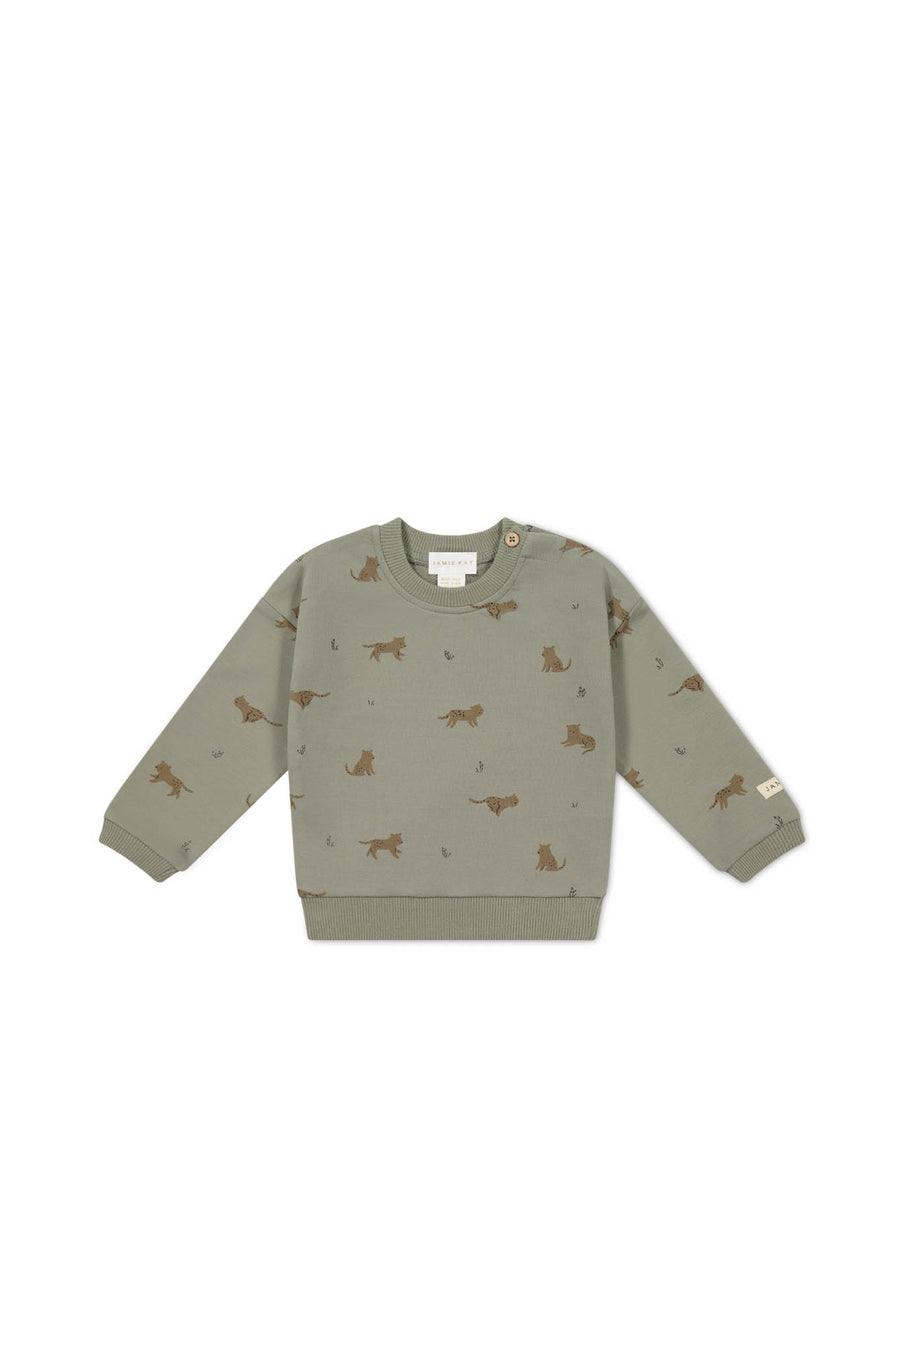 Organic Cotton Damien Sweatshirt - Lenny Leopard Sage Childrens Sweatshirt from Jamie Kay NZ